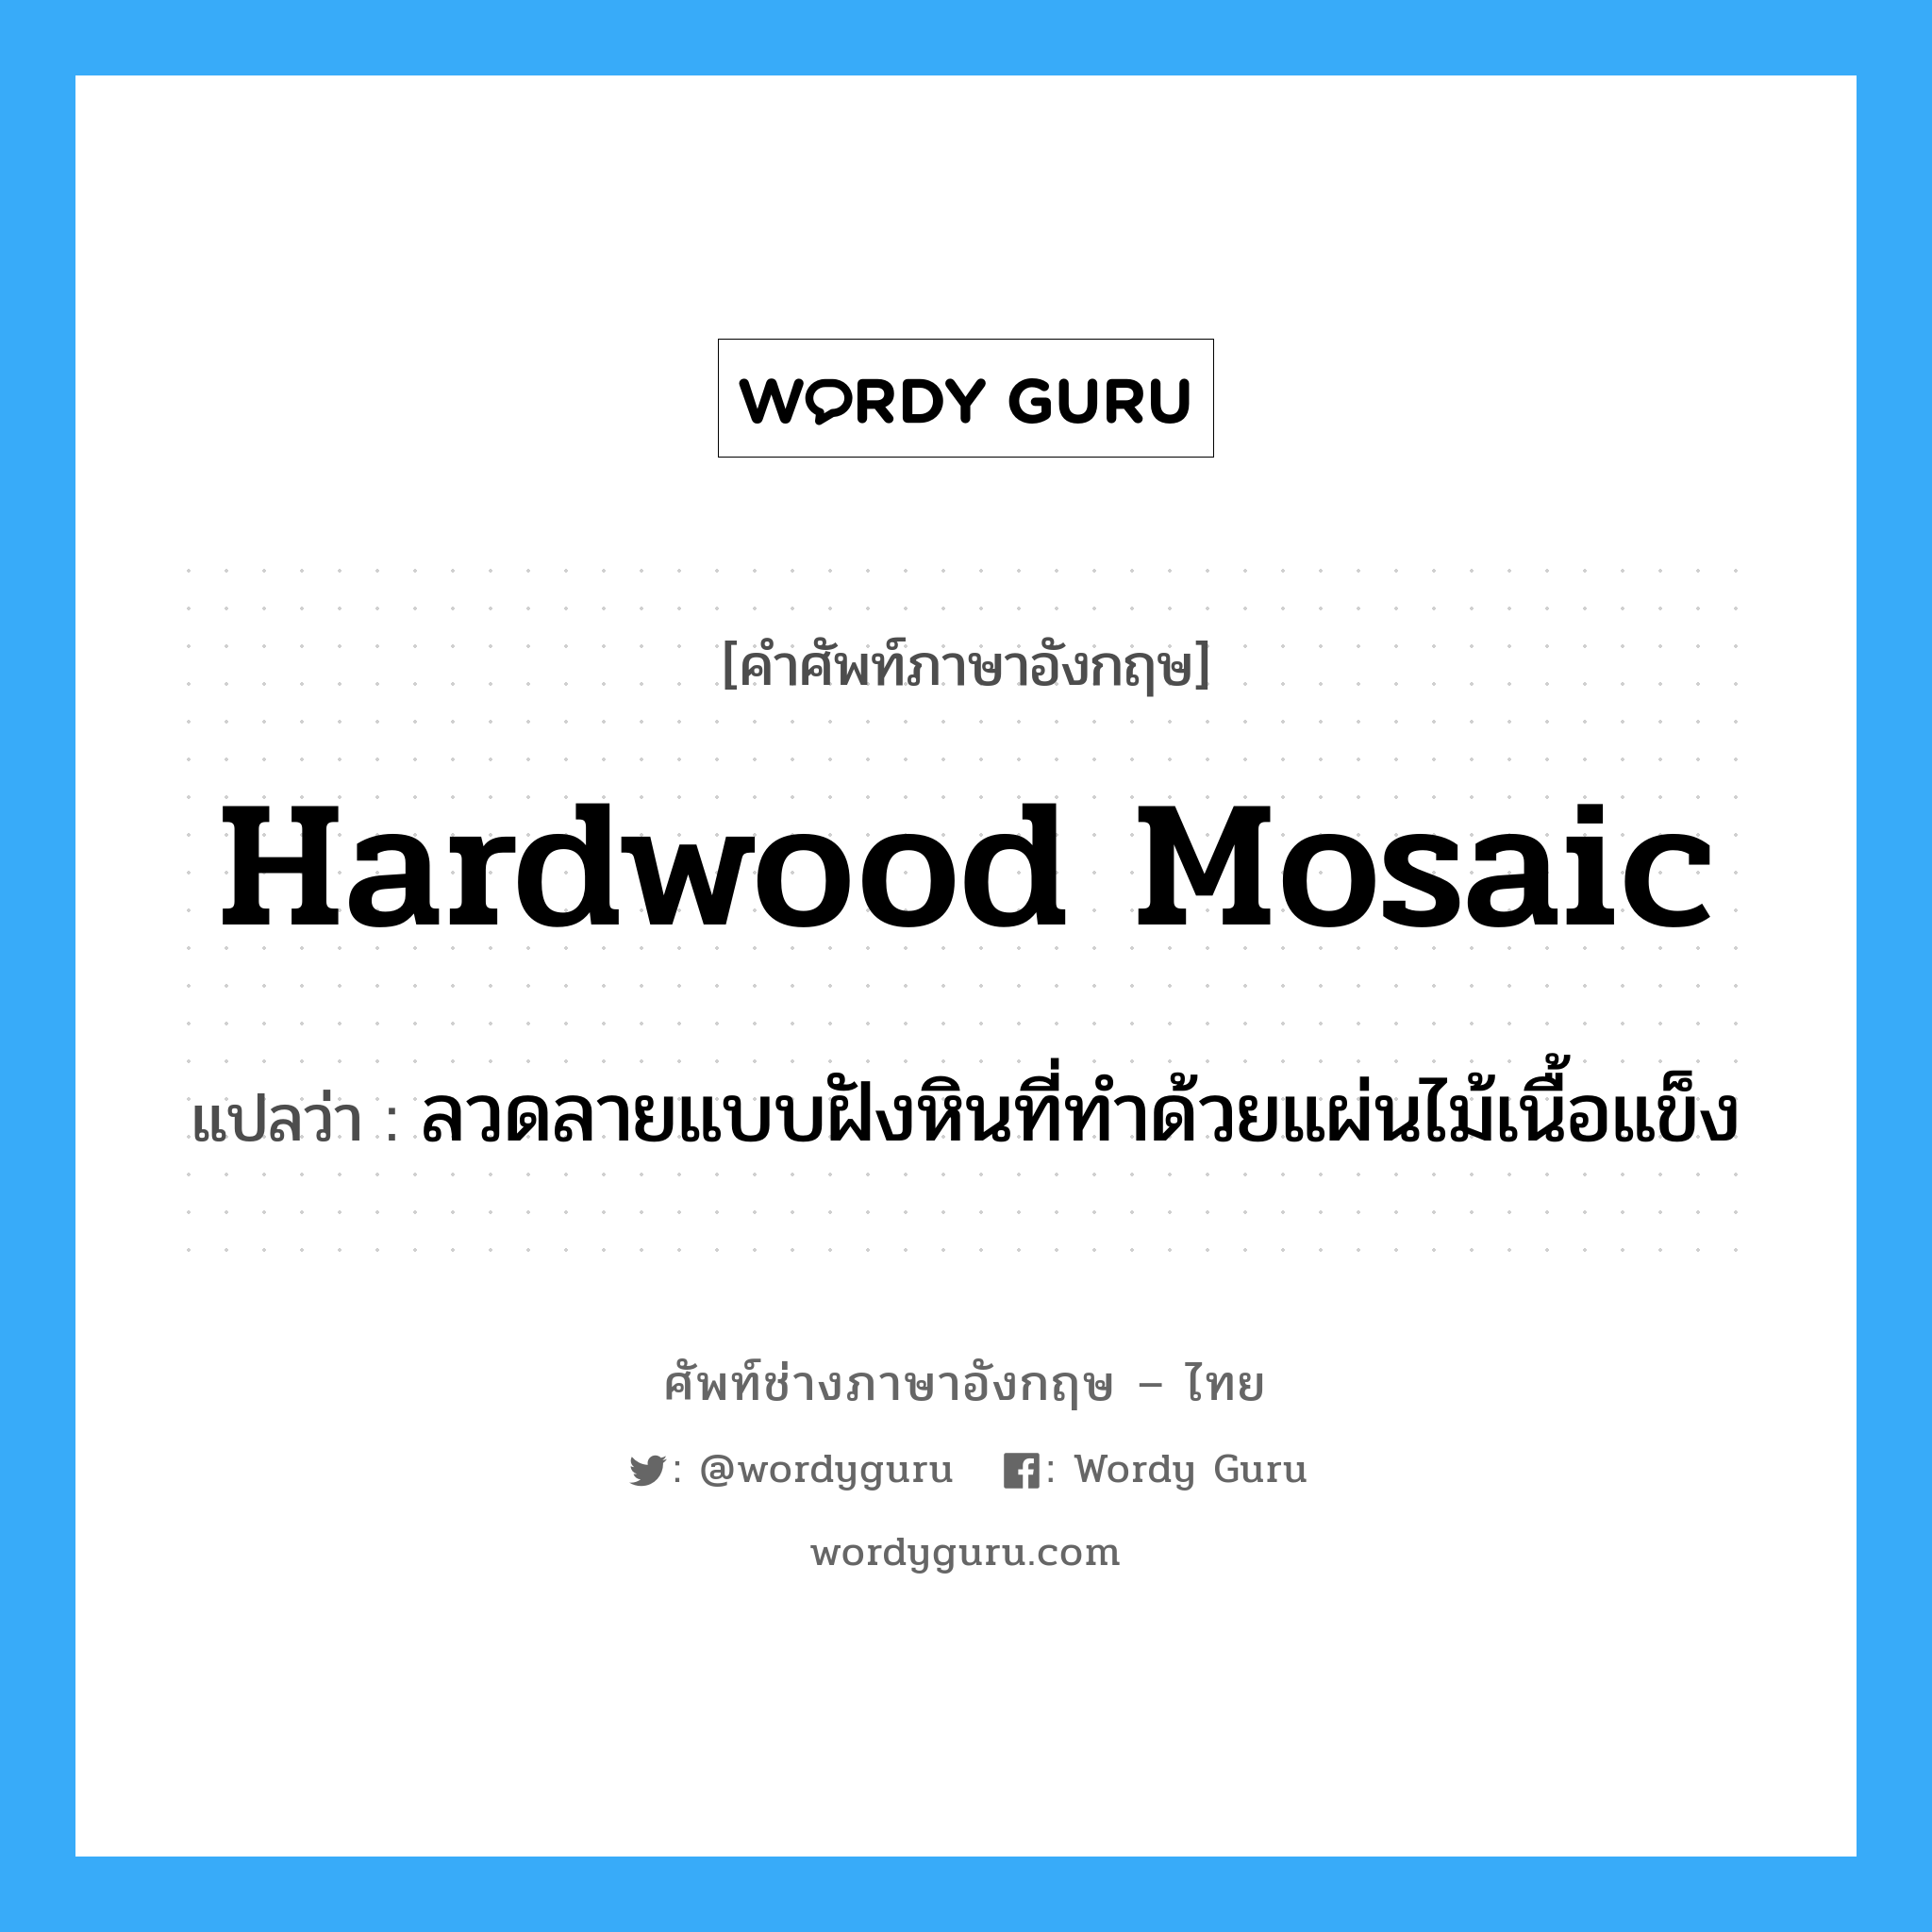 hardwood mosaic แปลว่า?, คำศัพท์ช่างภาษาอังกฤษ - ไทย hardwood mosaic คำศัพท์ภาษาอังกฤษ hardwood mosaic แปลว่า ลวดลายแบบฝังหินที่ทำด้วยแผ่นไม้เนื้อแข็ง